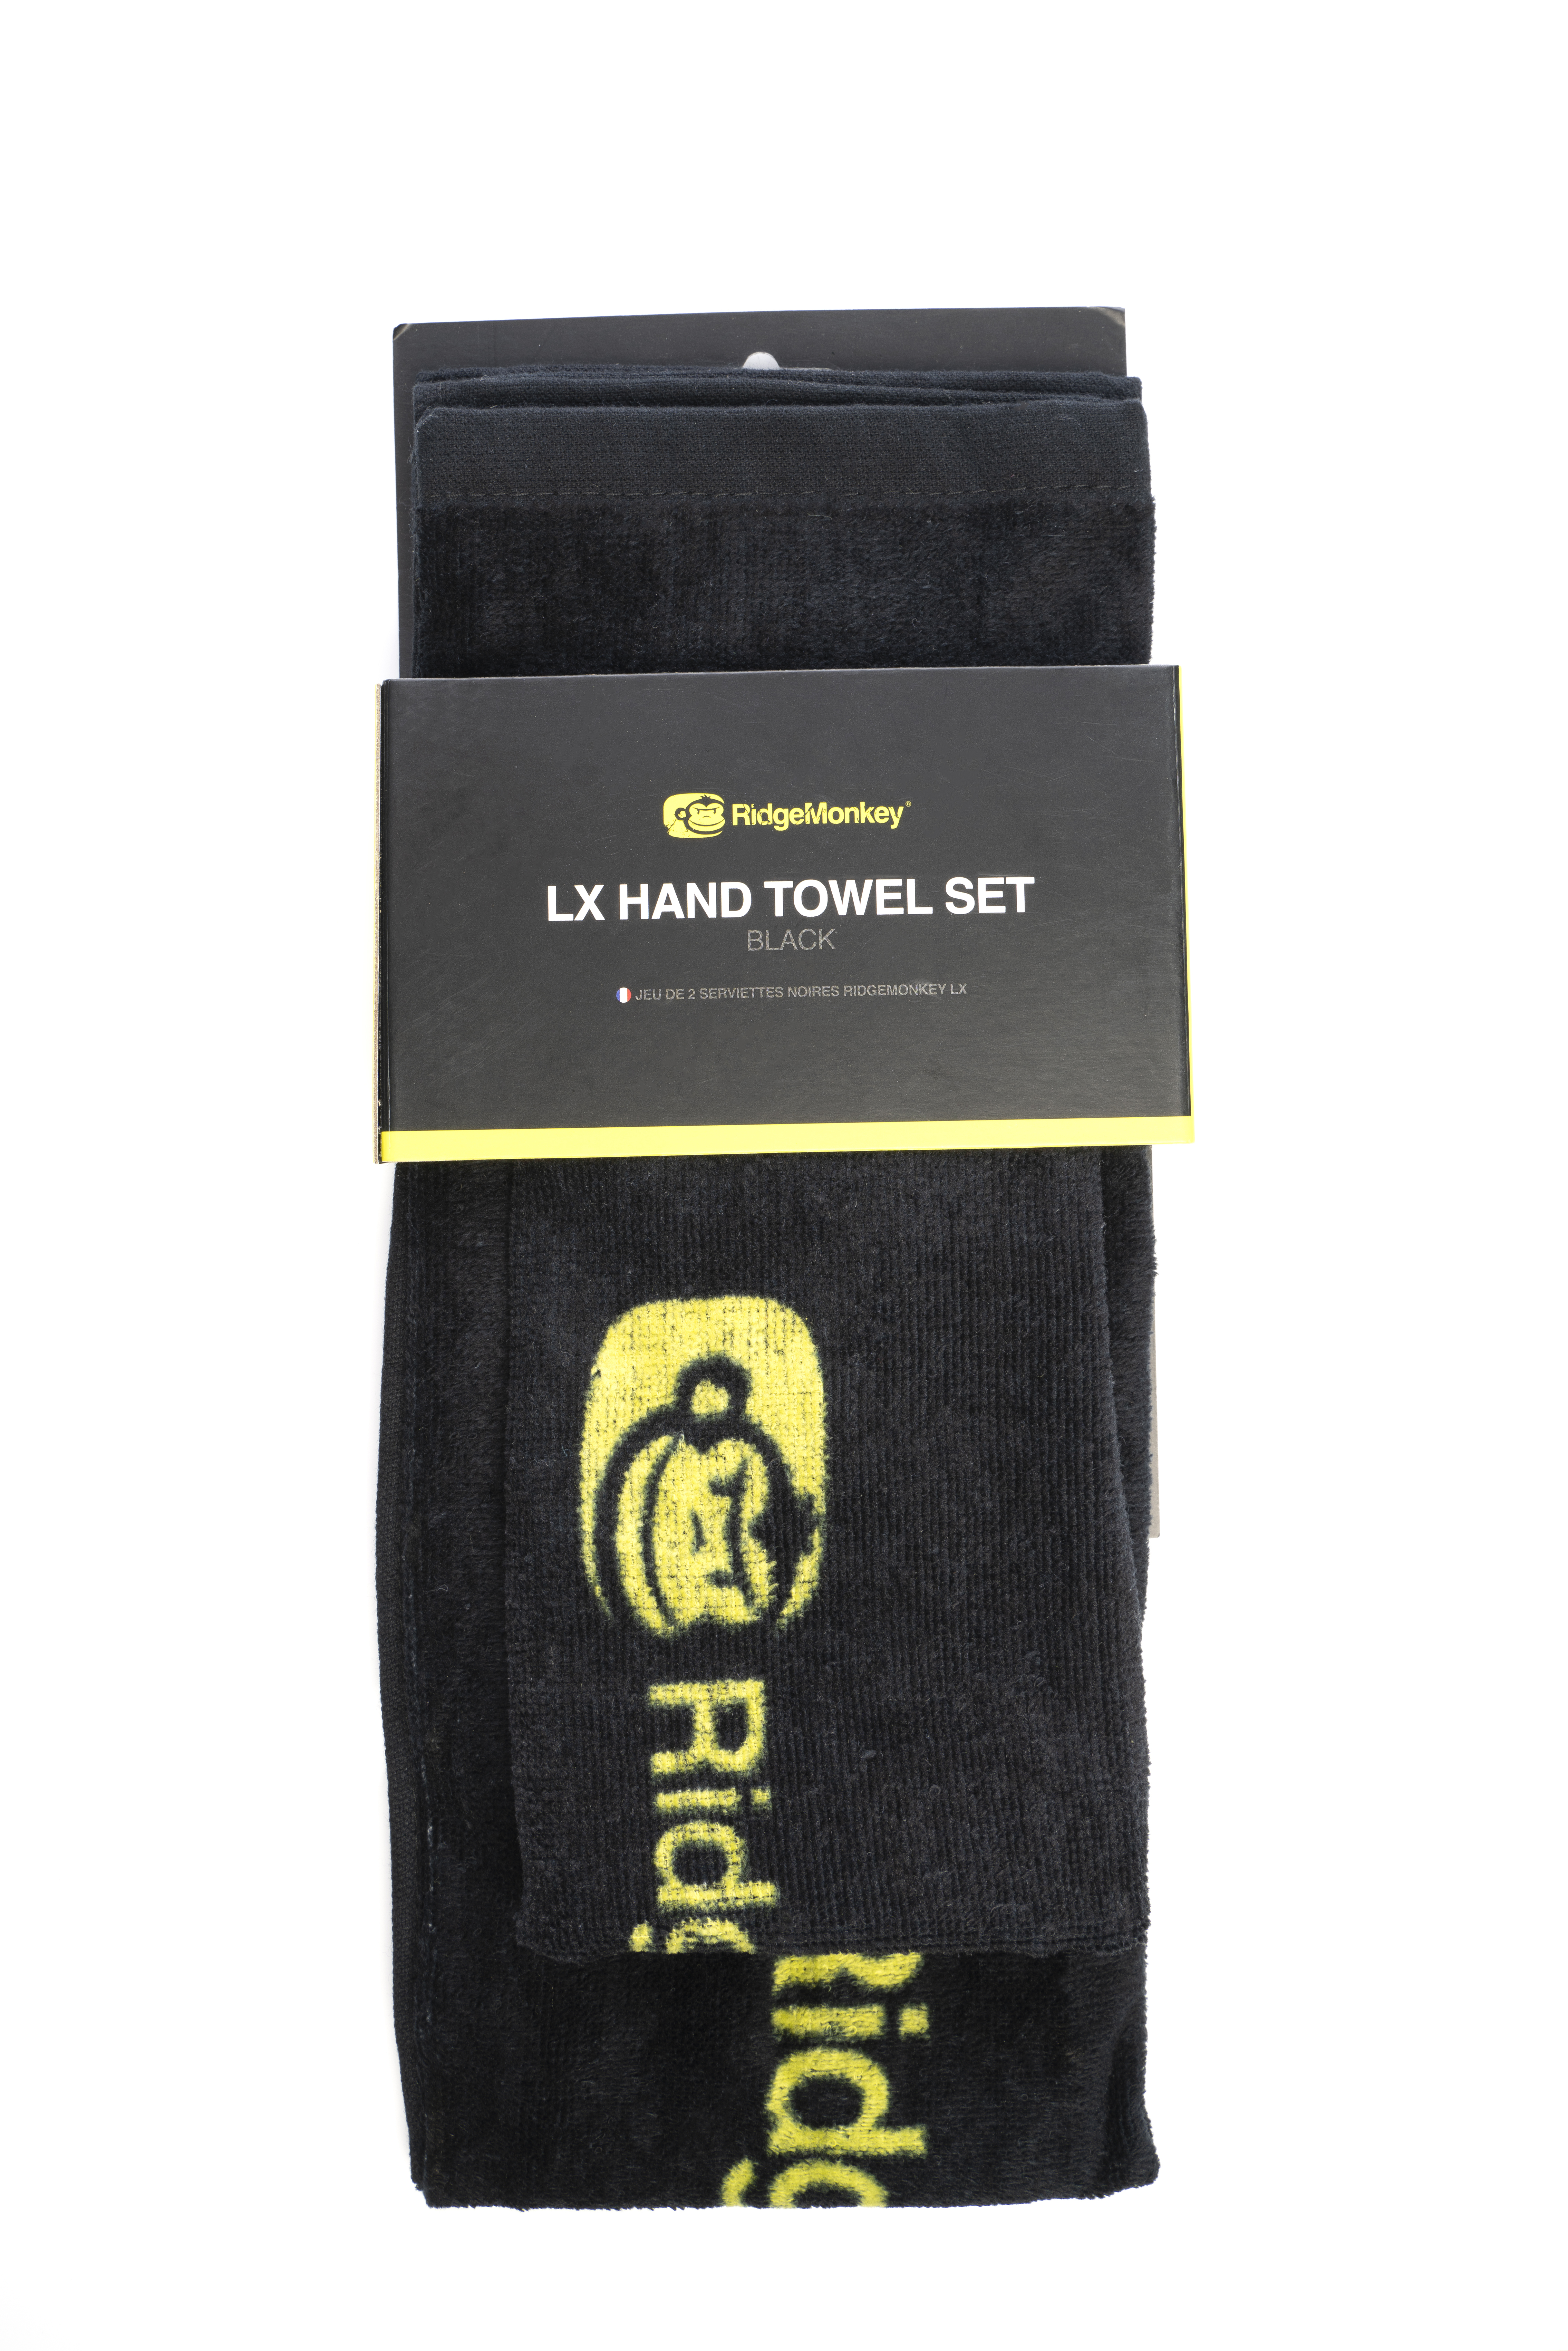 RidgeMonkey LX Hand Towel Set Black Handtuch Camping Angeln Outdoor NEW